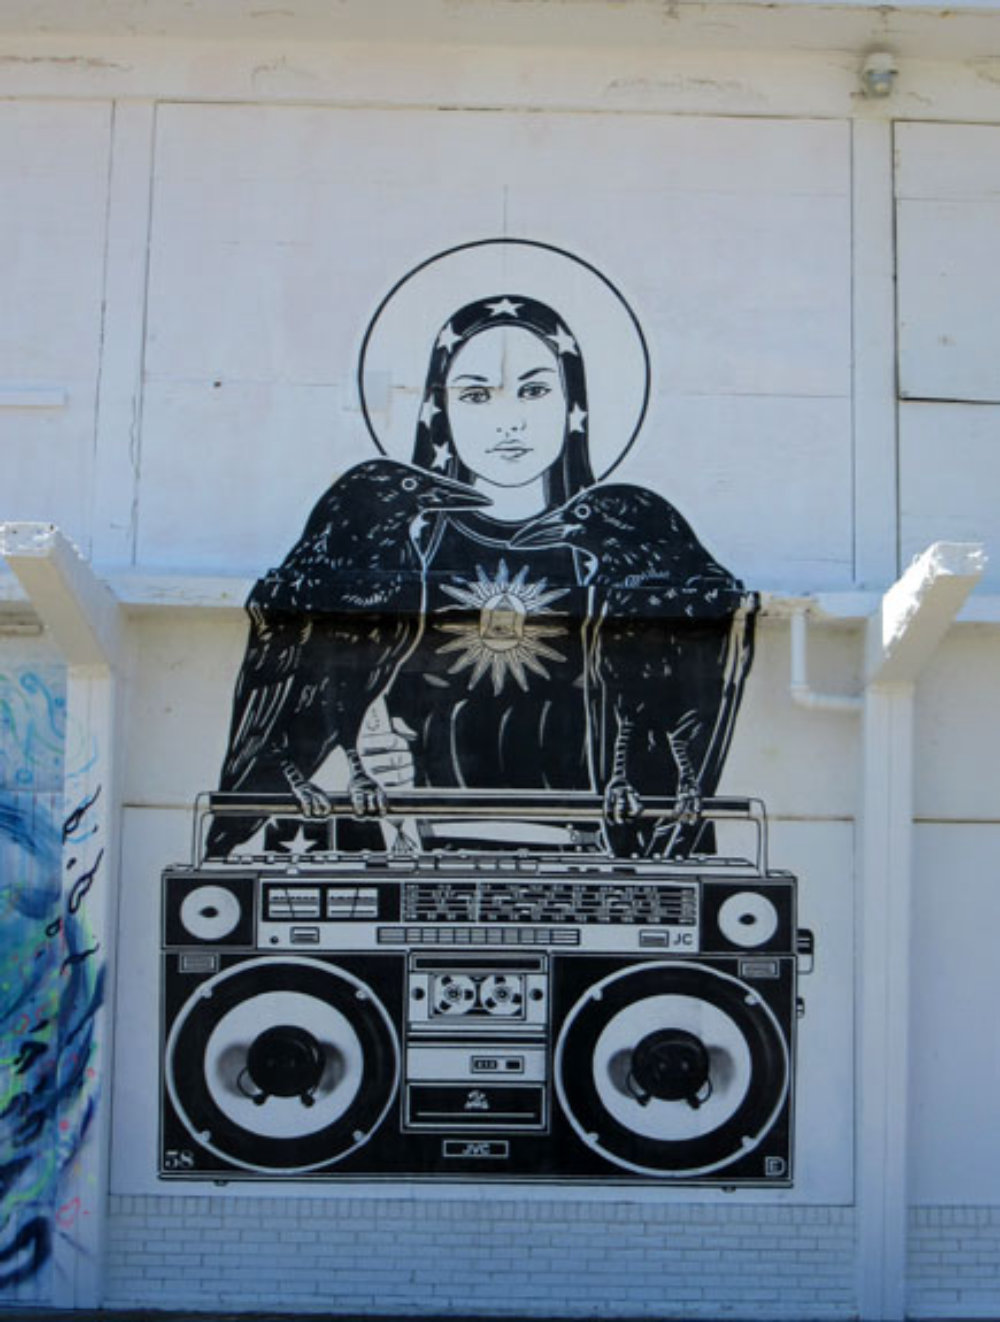 mural in Asbury Park by artist Dylan Egon.